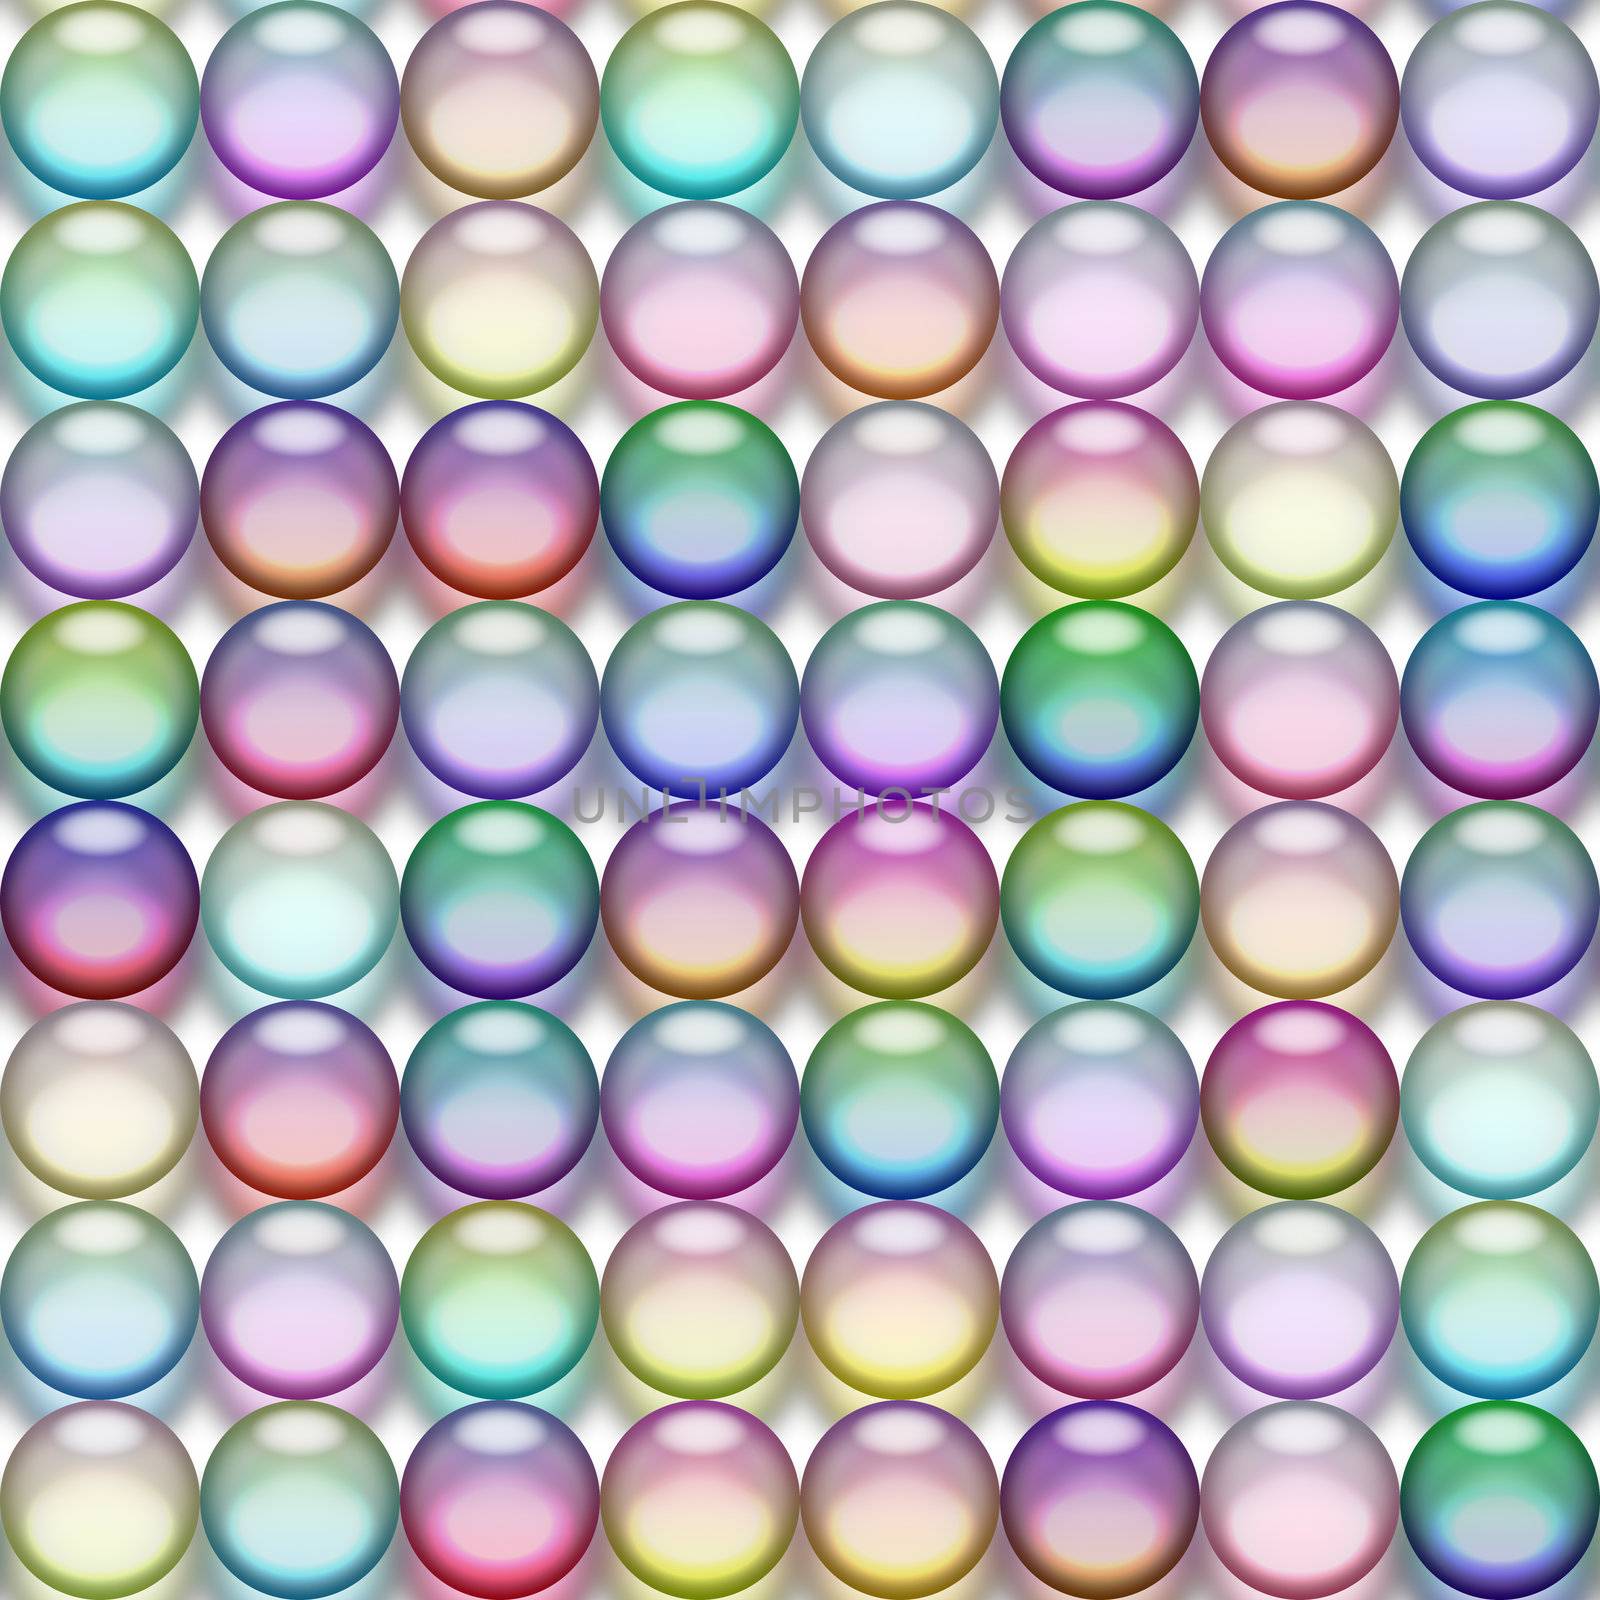 translucent marbles by hospitalera